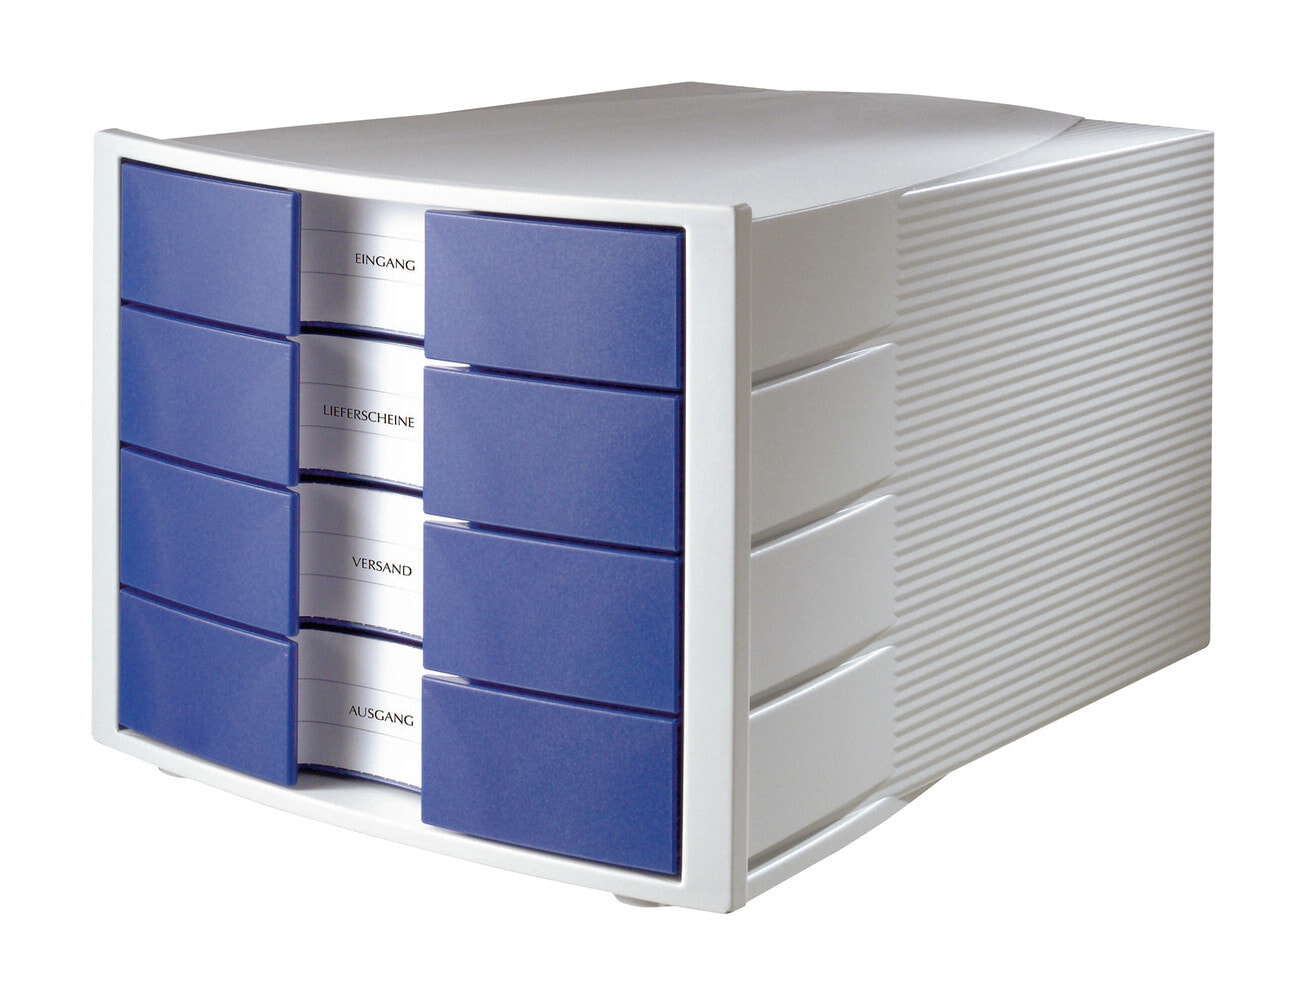 HAN Impuls файловая коробка/архивный органайзер Пластик Синий, Серый 1010-X-14